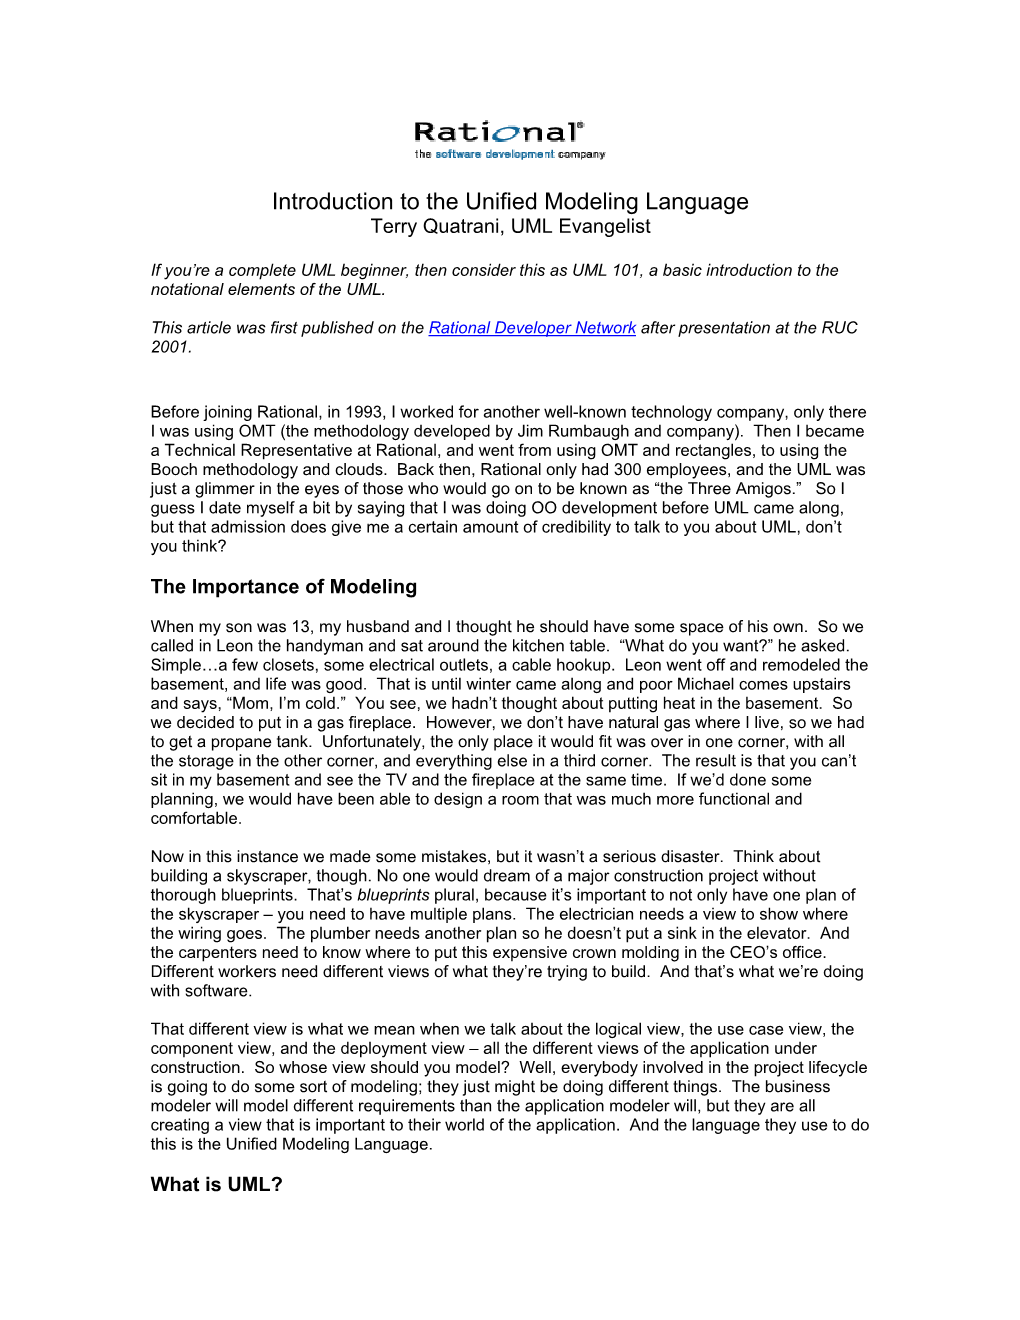 Introduction to the Unified Modeling Language Terry Quatrani, UML Evangelist